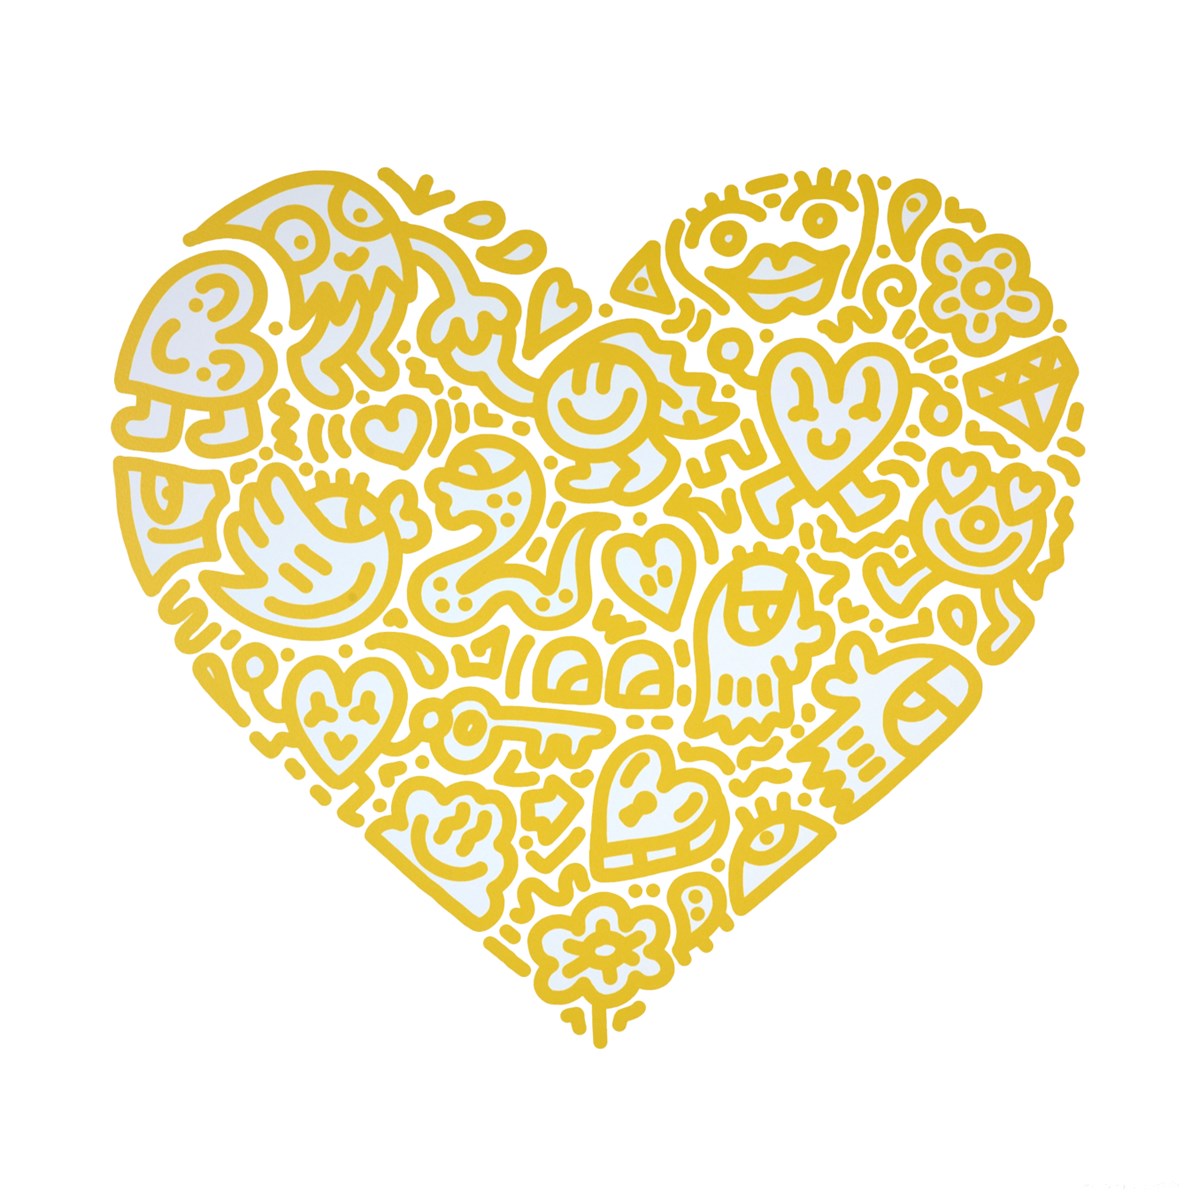 Unlocked Heart (Yellow), 2021